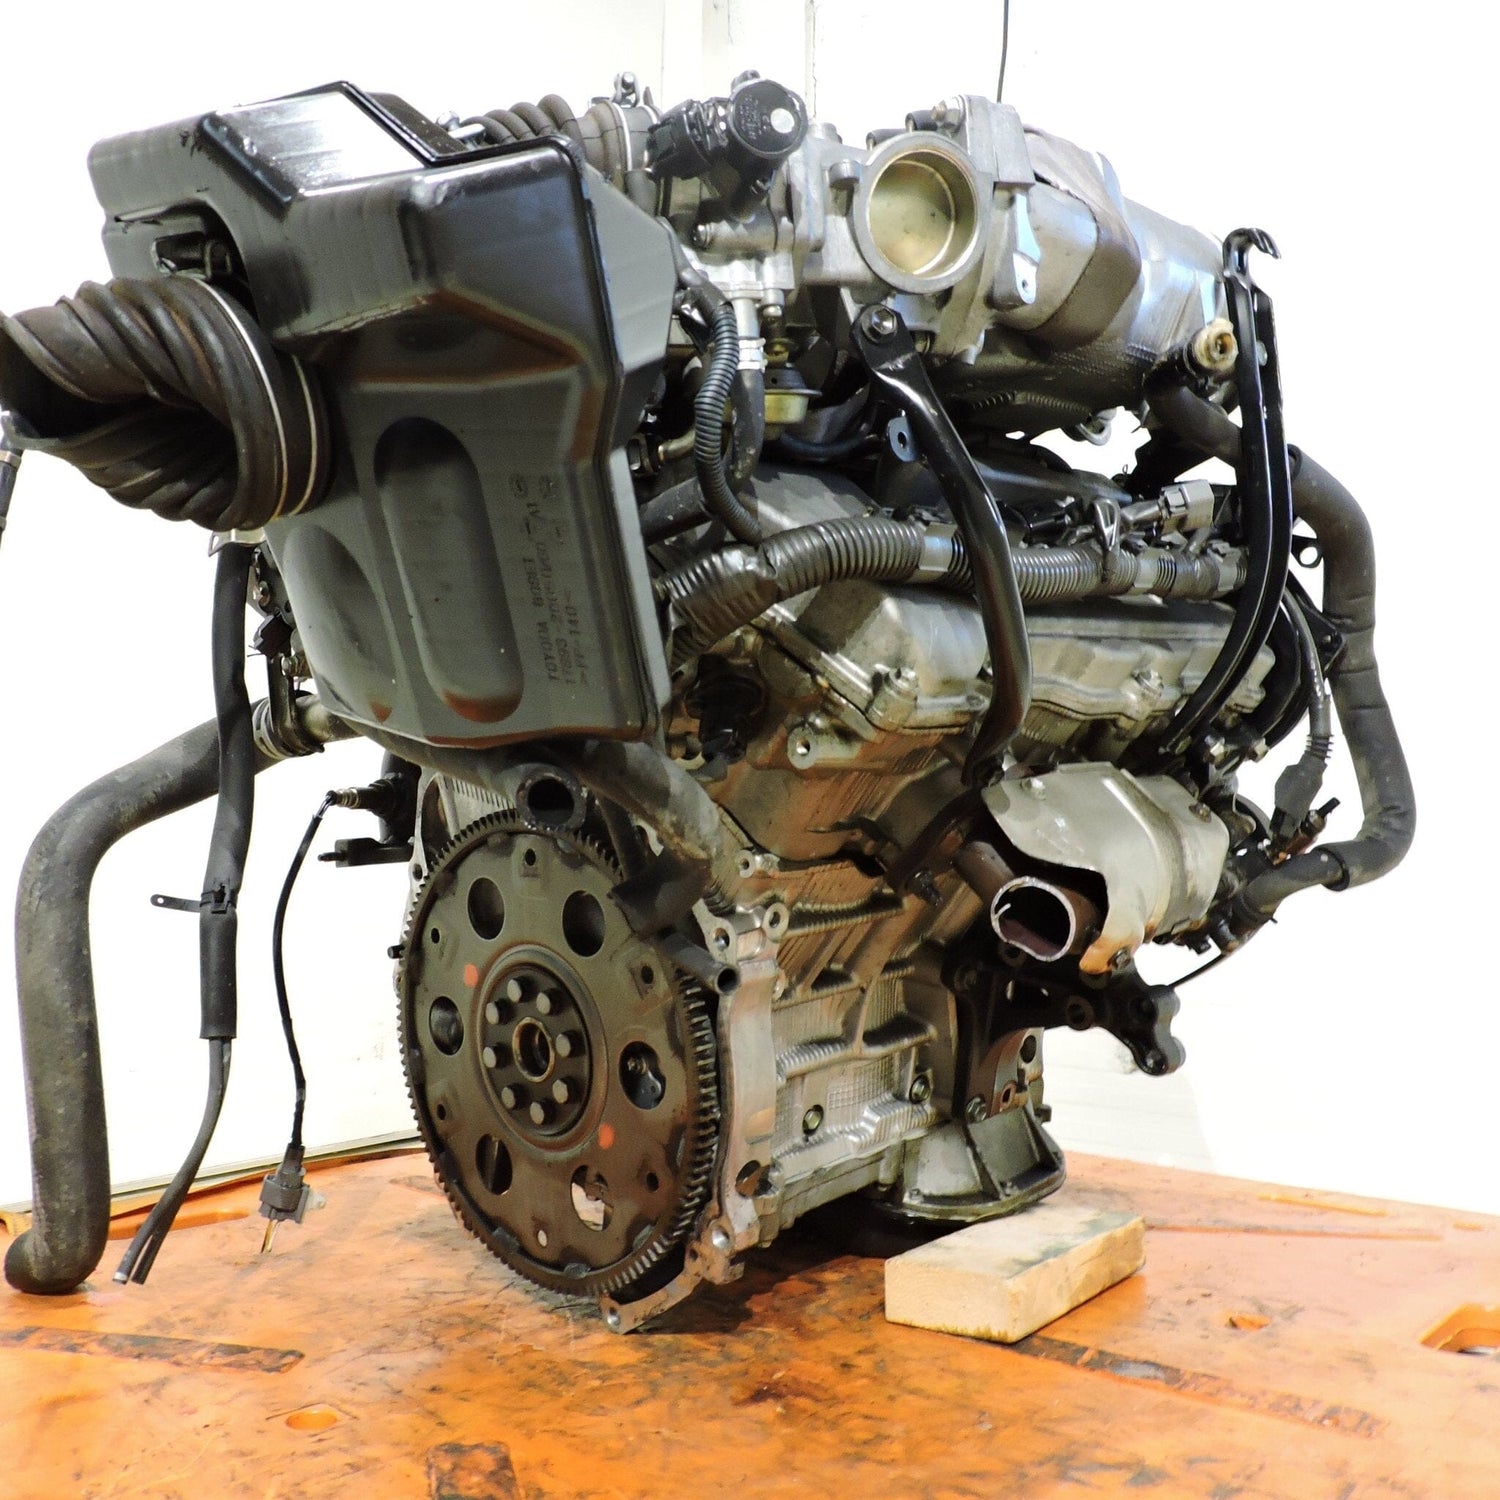 Toyota Highlander 2001-2003 3.0L V6 Fwd JDM Engine - 1MZ-FE